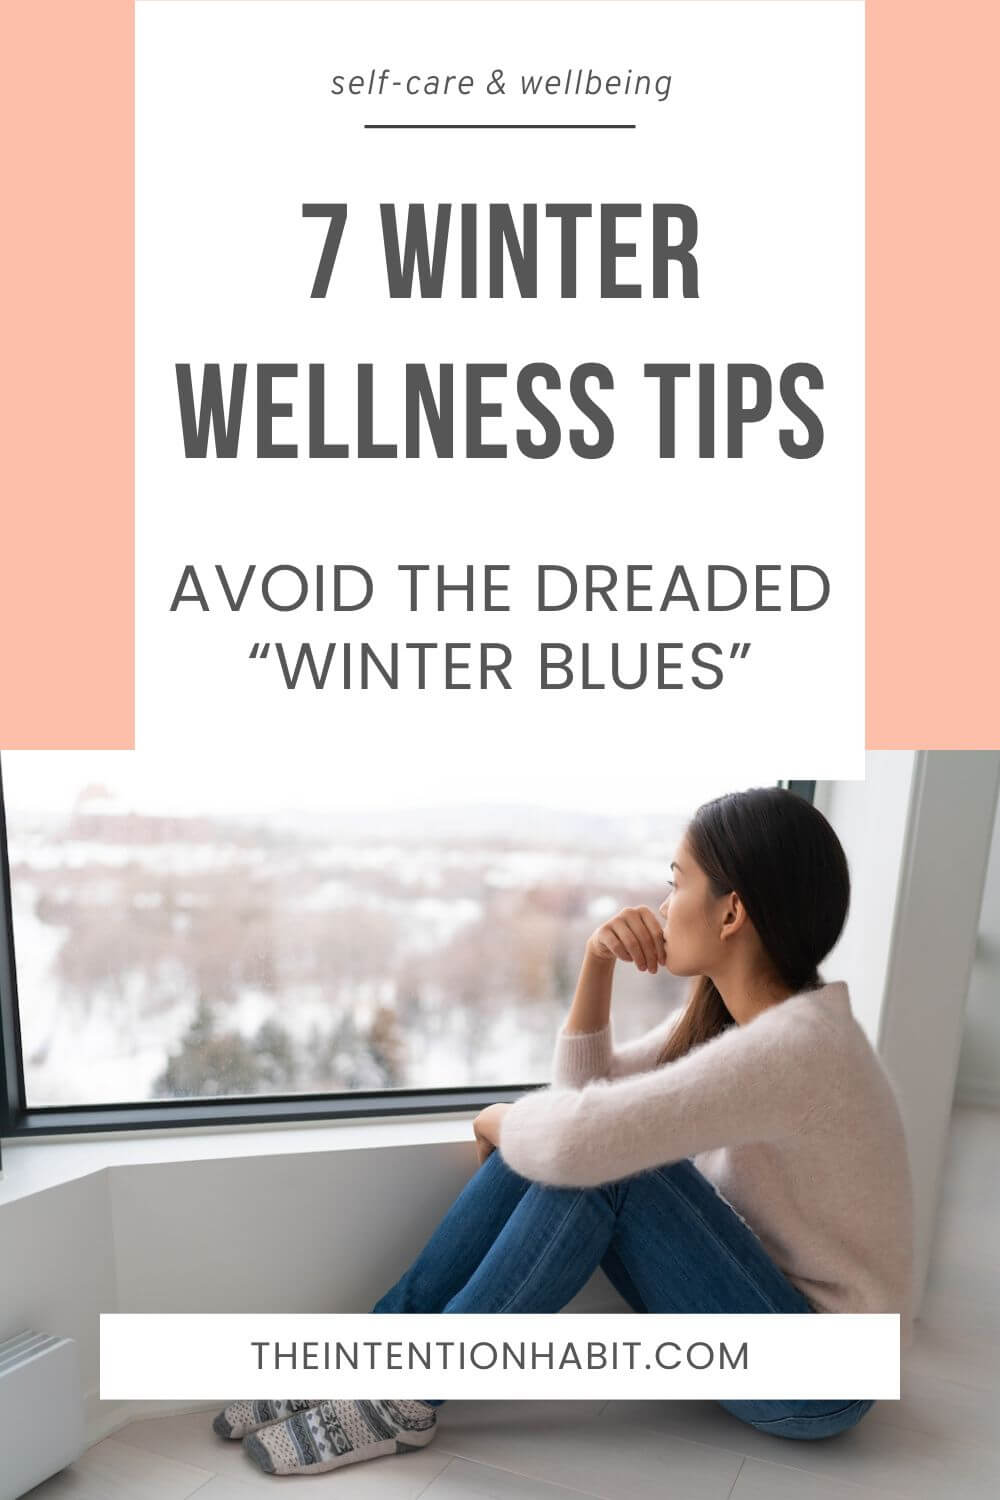 7 winter wellness tips avoid the dreaded winter blues.